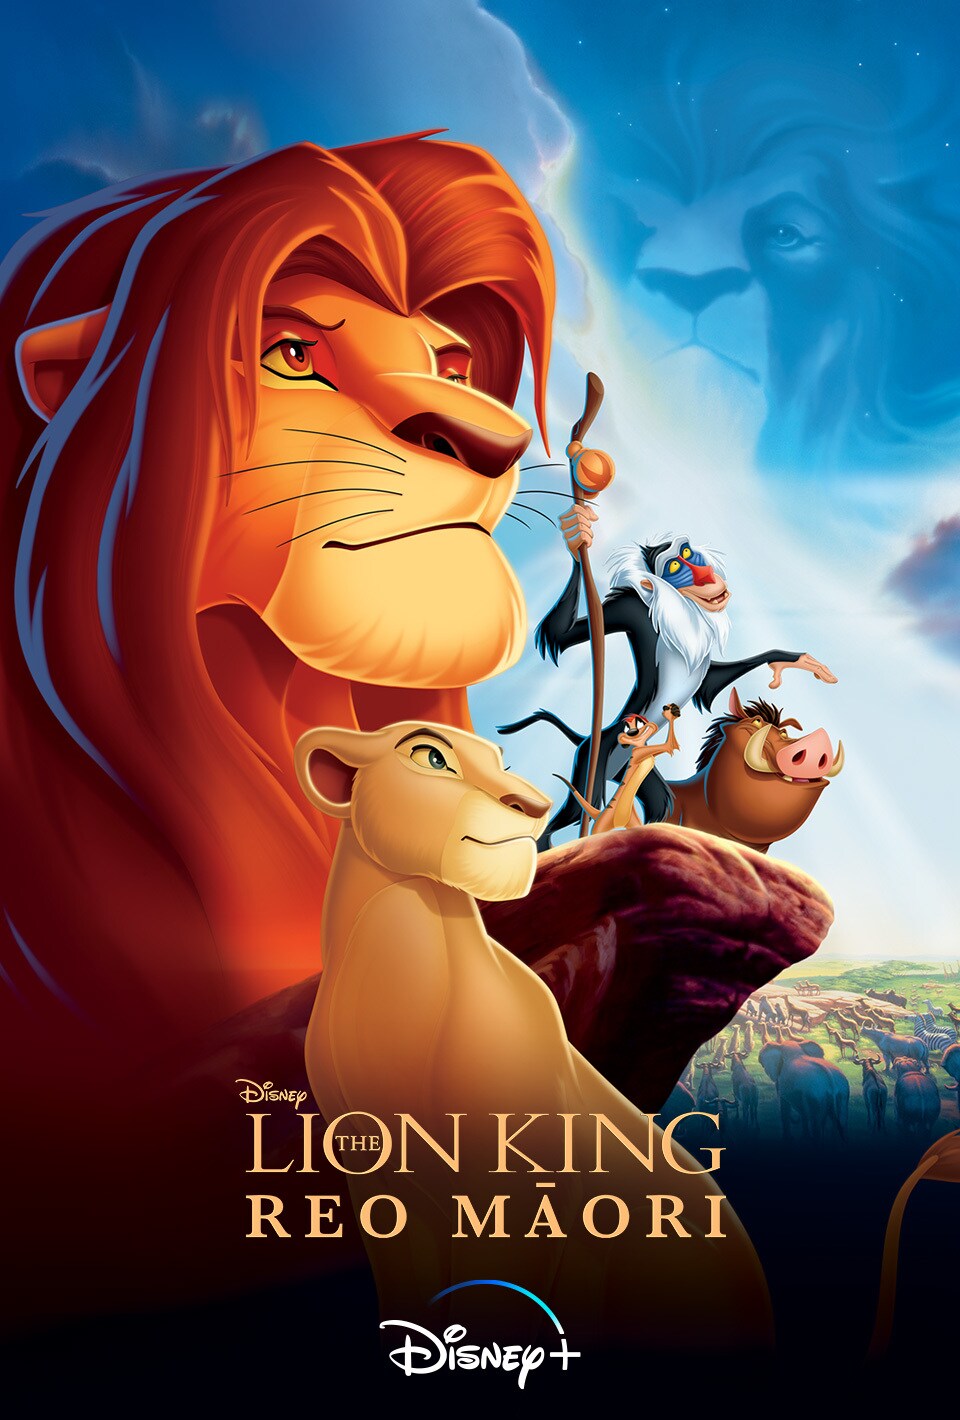 The Lion King Reo Maori on Disney+